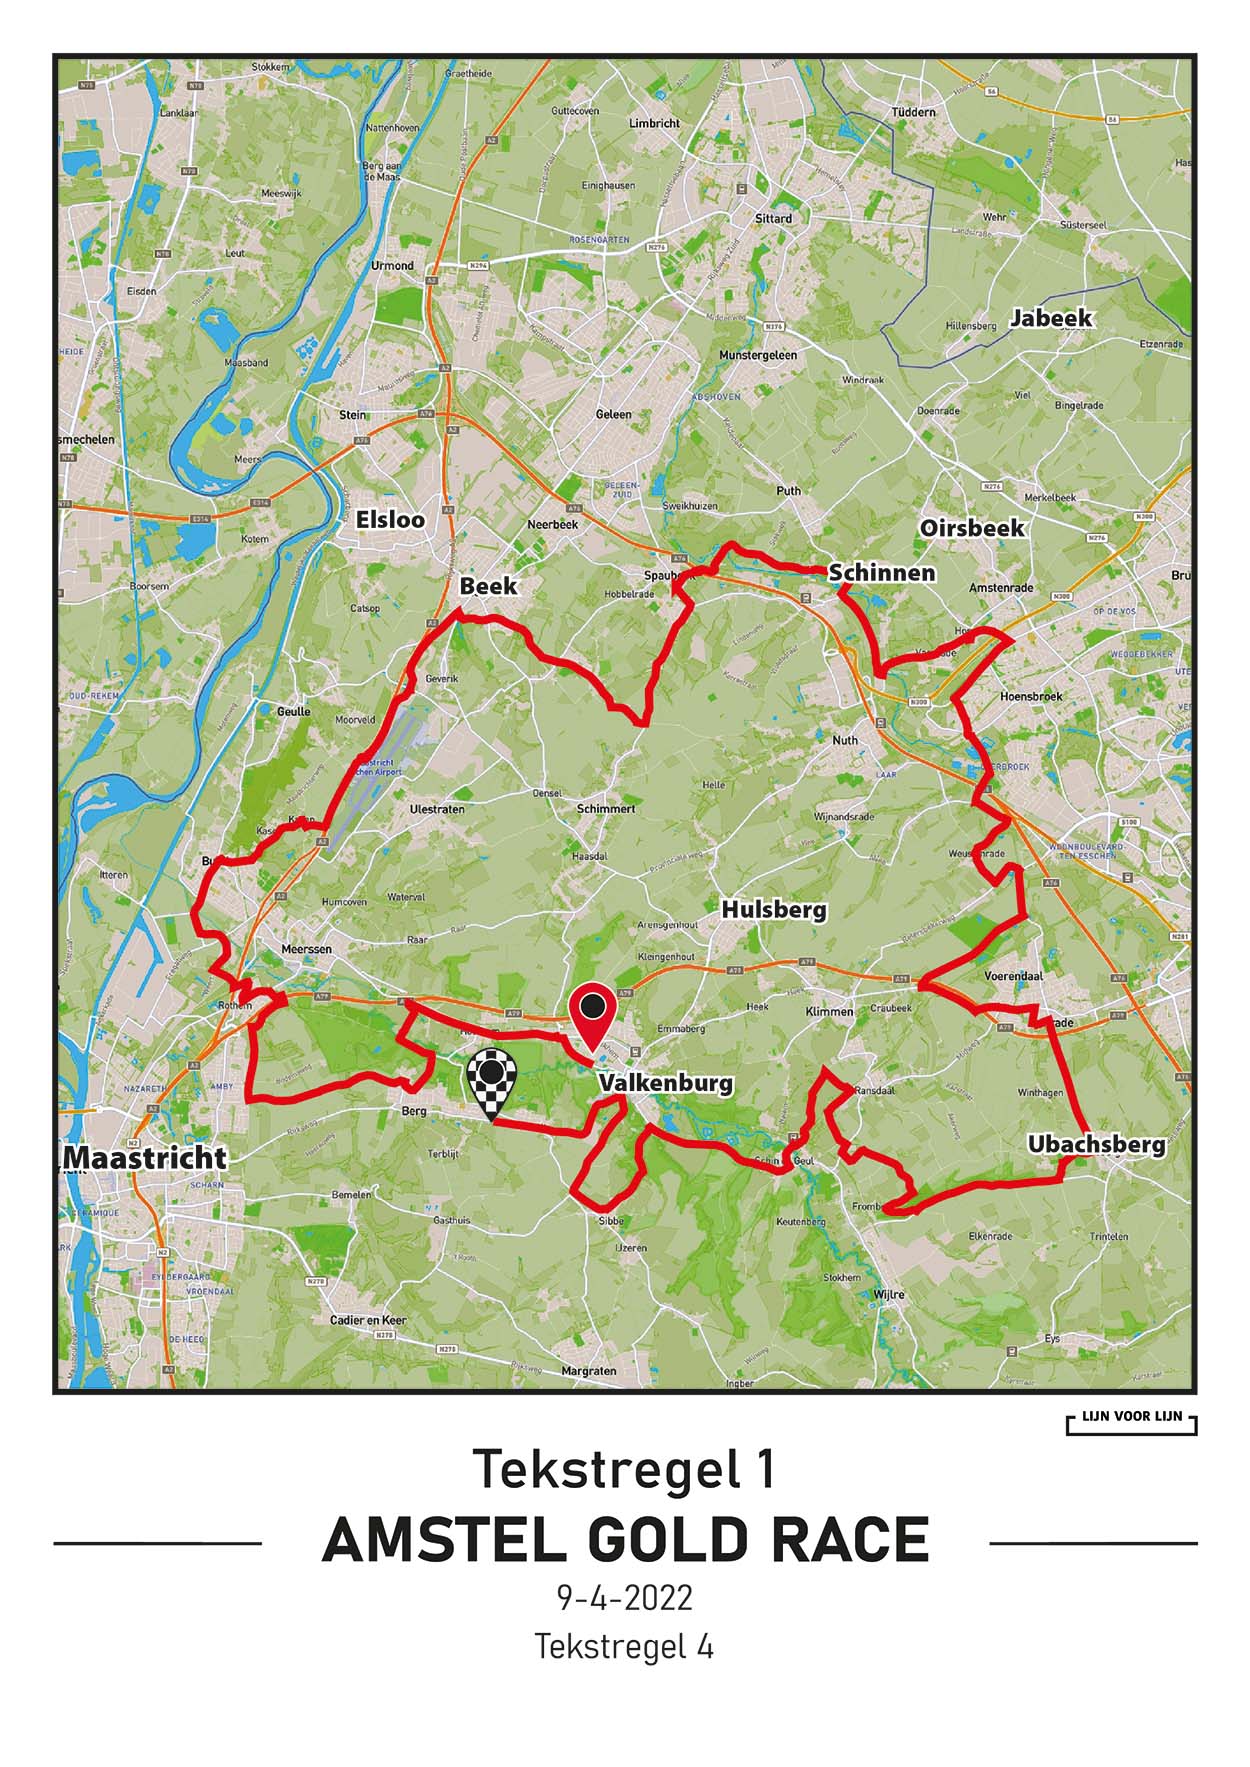 Amstel Gold Race 65km, 2022